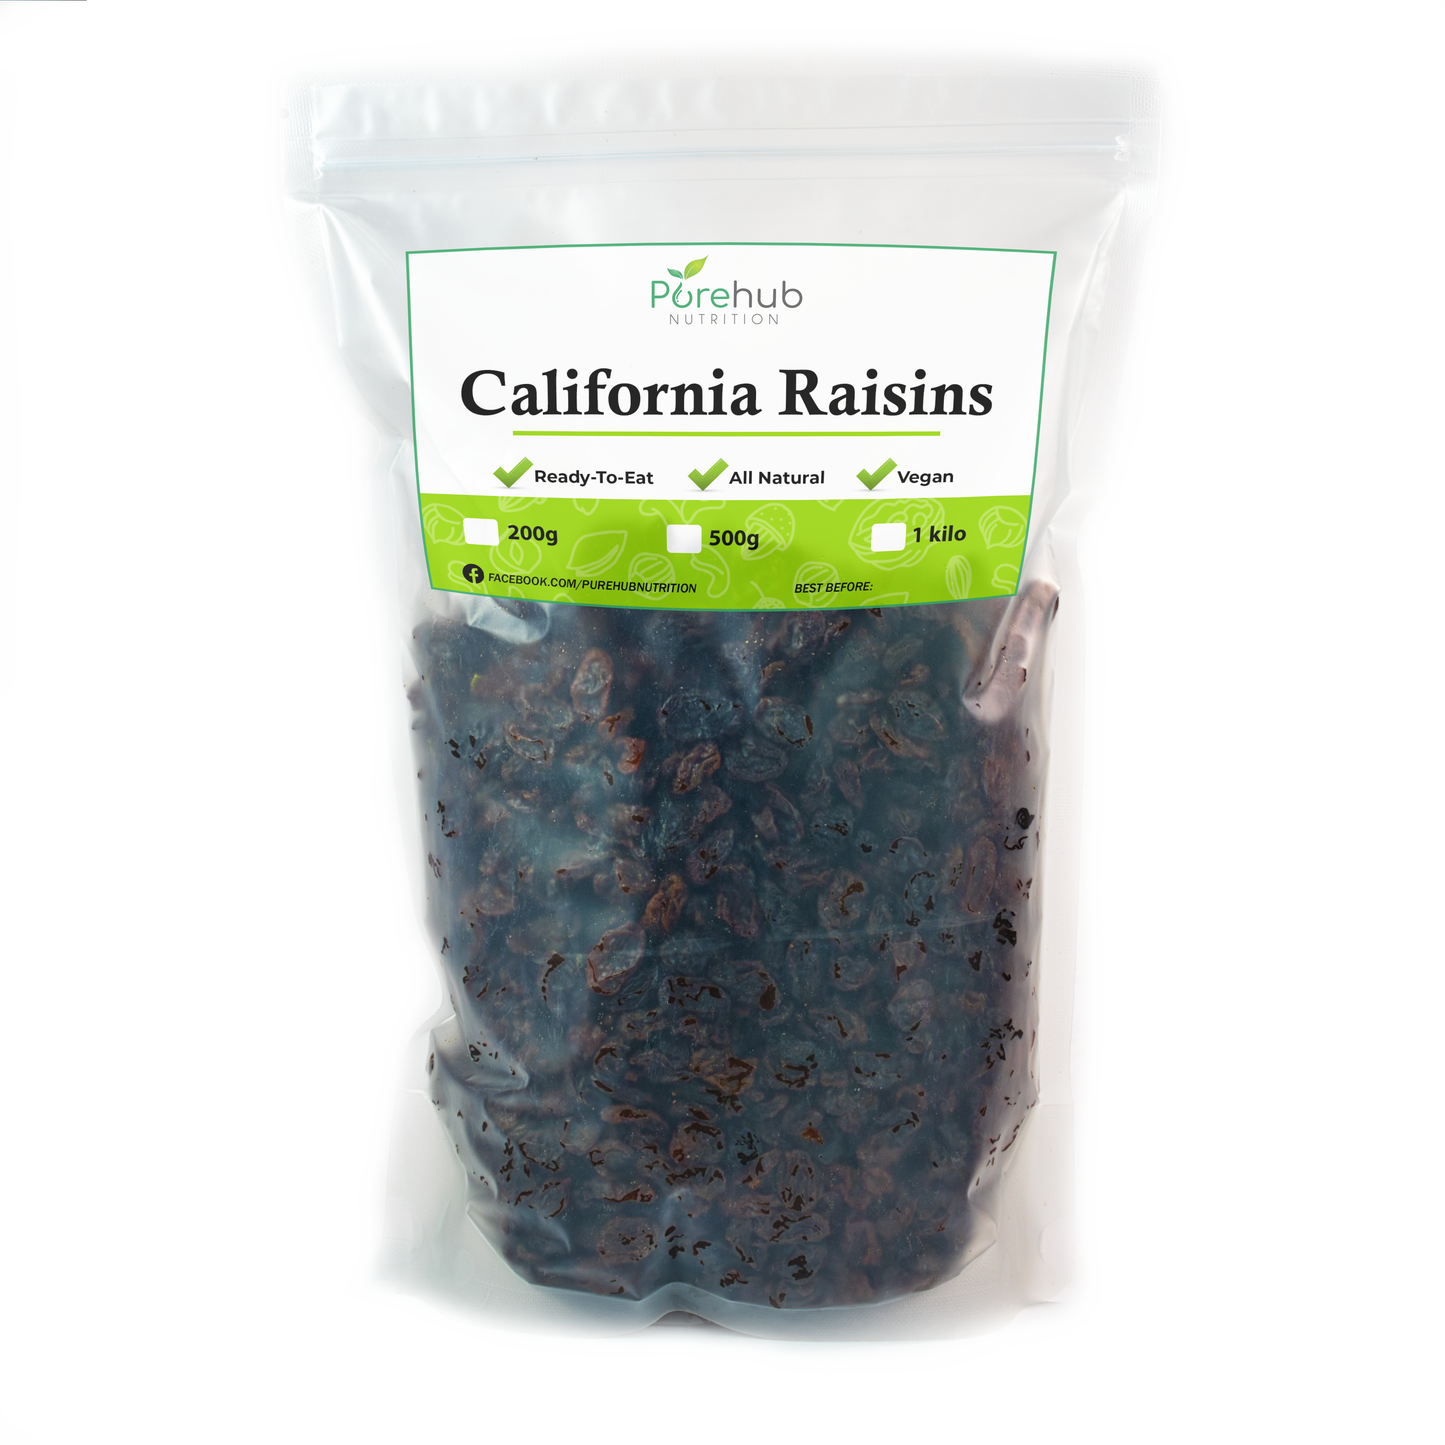 Seedless California Raisins